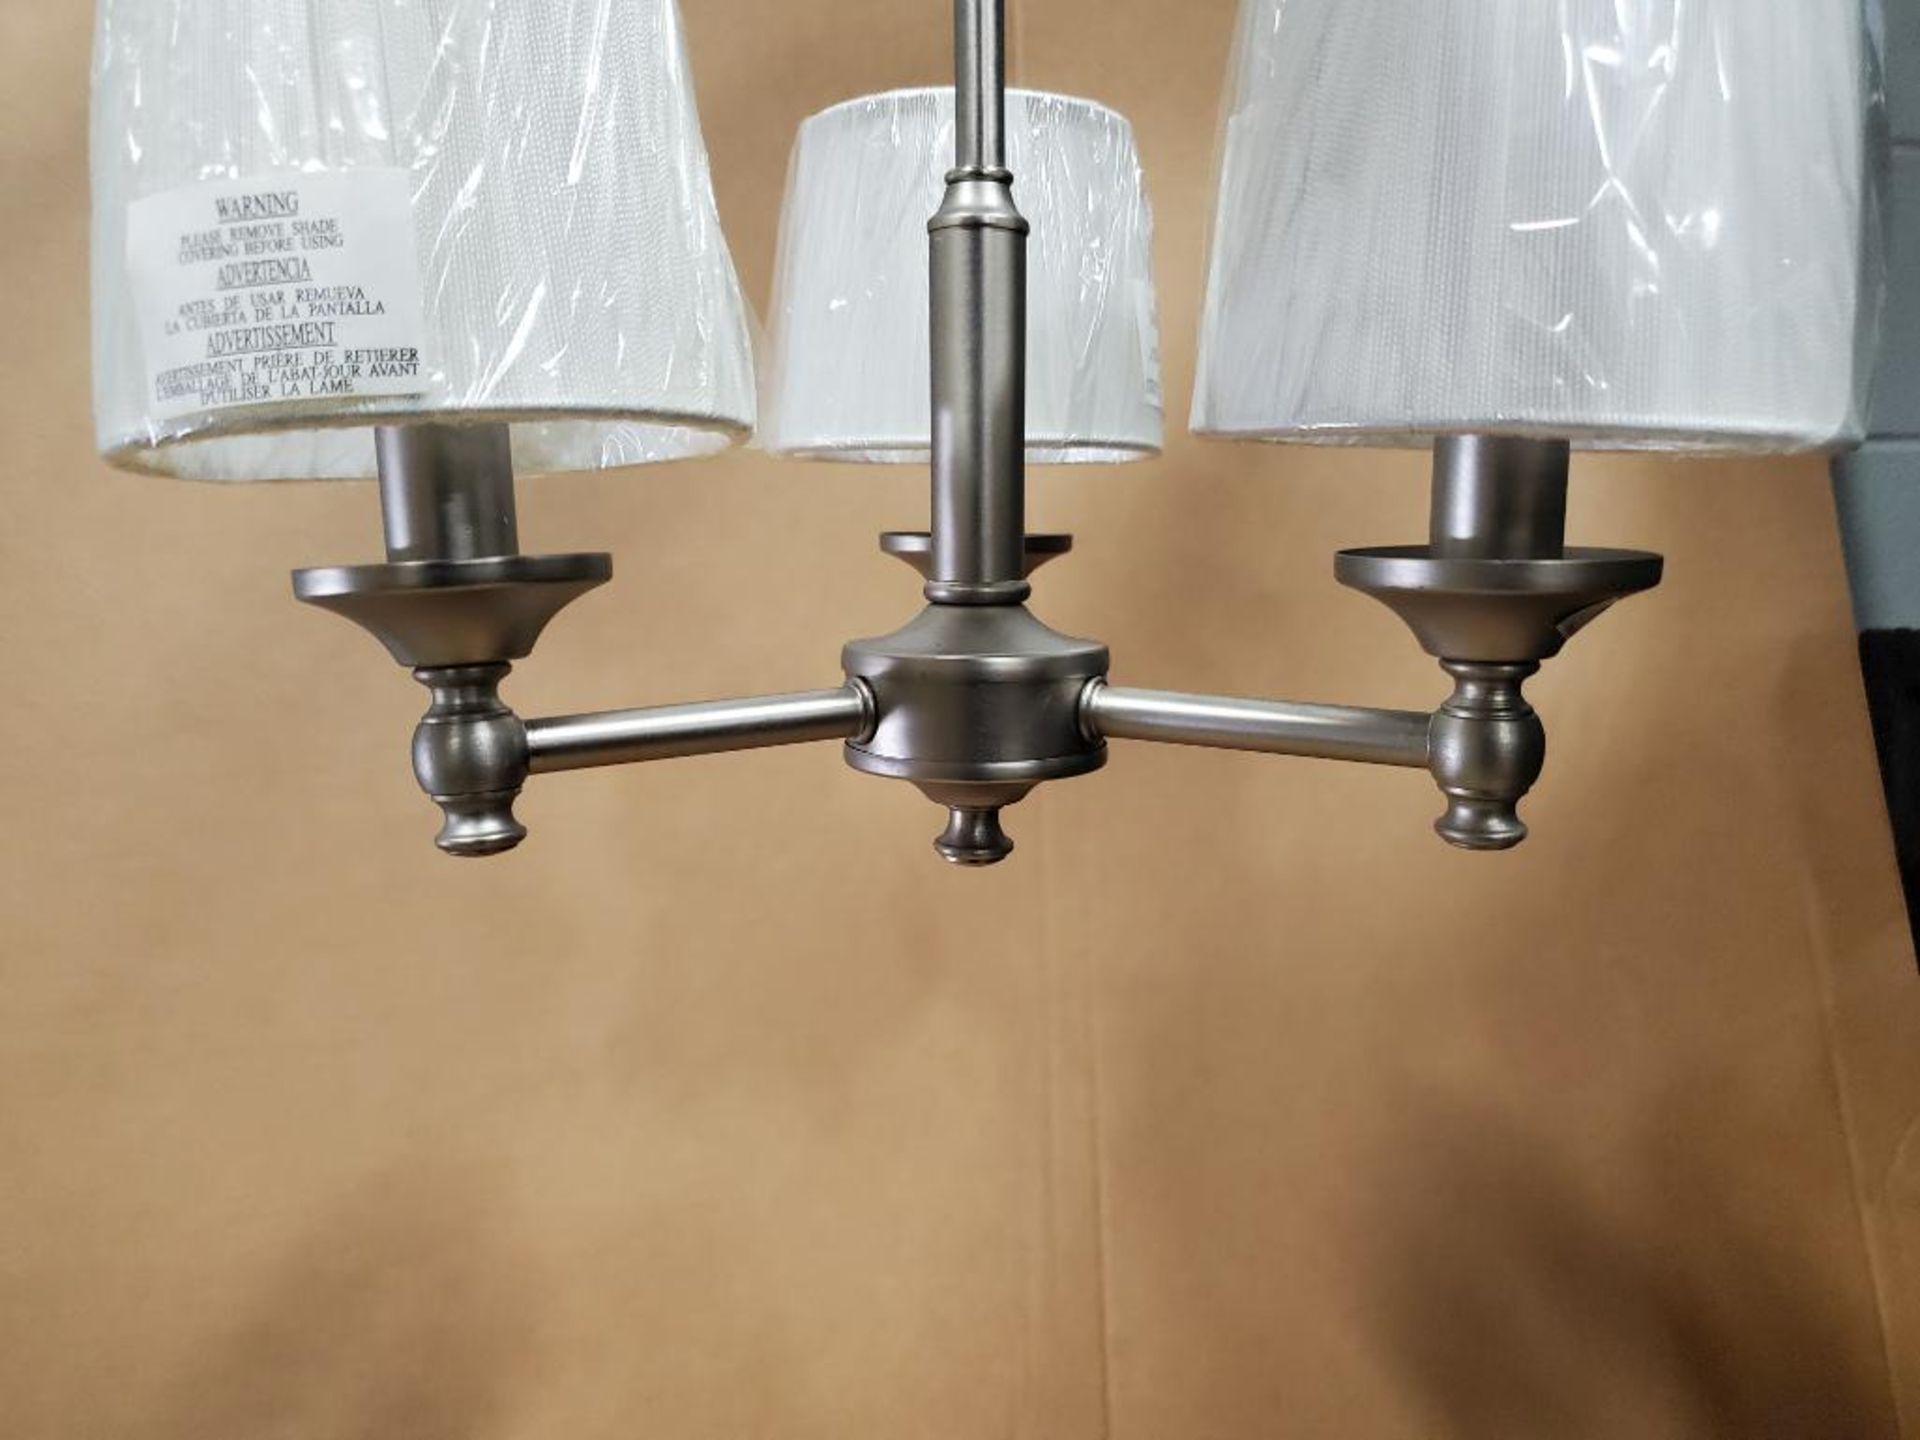 Qty 112 - SunLink 12 volt 3-light chandelier. Part #RV-185303-401. New in bulk box. - Image 3 of 10